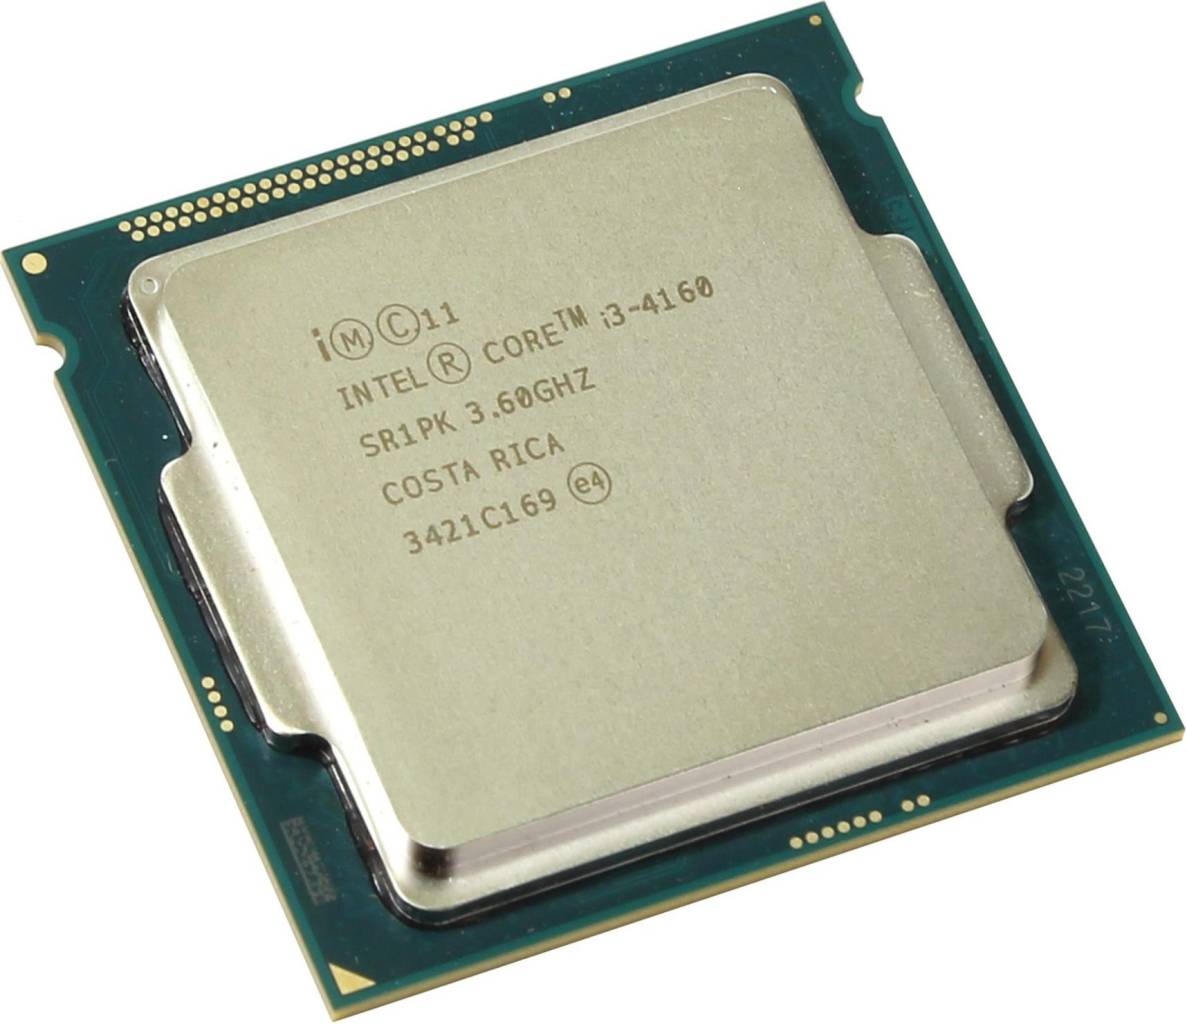   Intel Core i3-4160 3.6 GHz/2core/SVGA HD Graphics4400/0.5+3Mb/54W/5 GT/s LGA1150